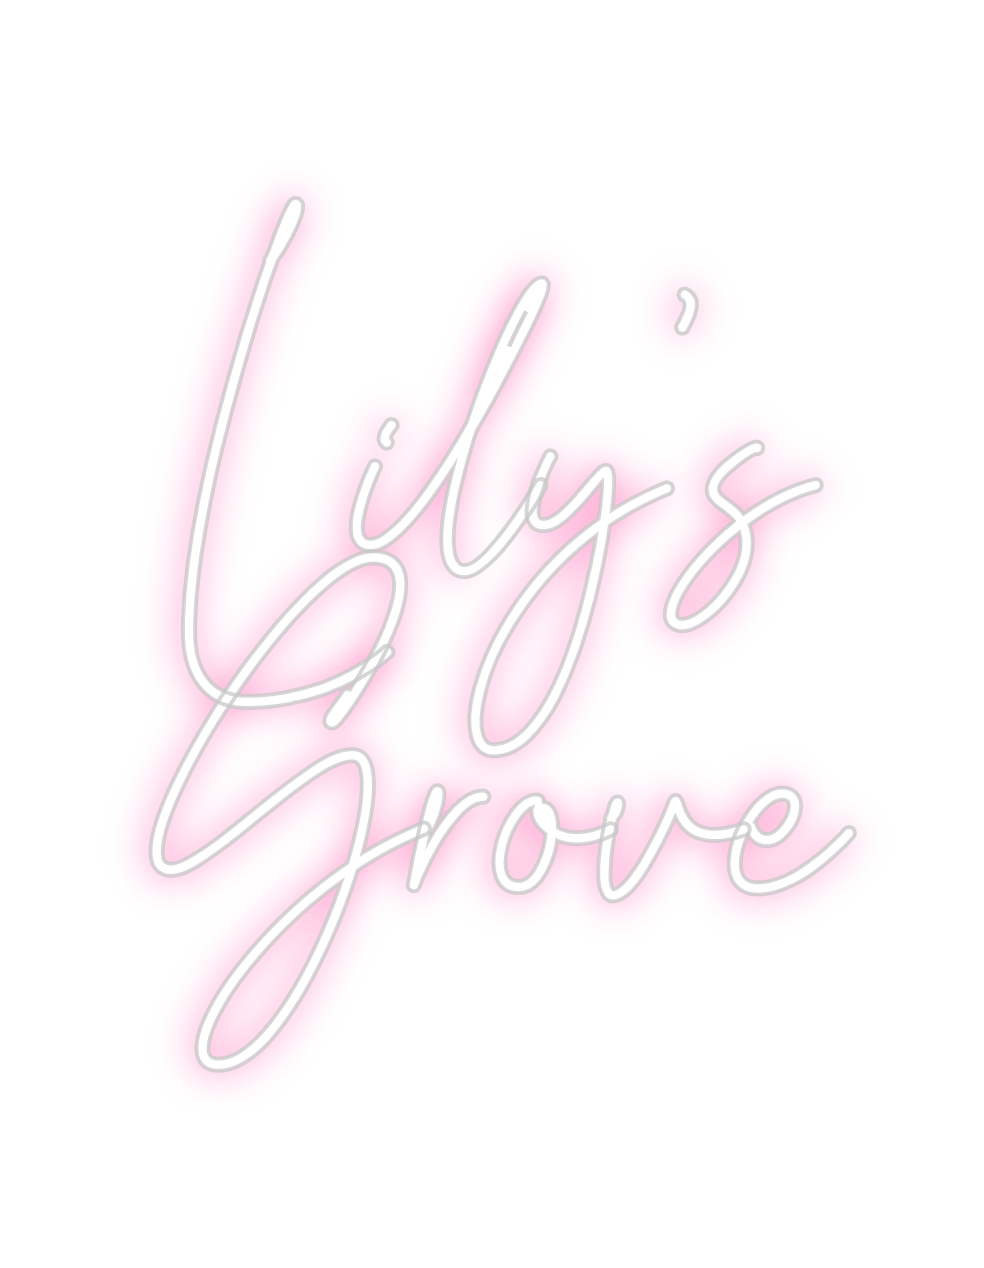 Custom Neon: Lily’s
Grove